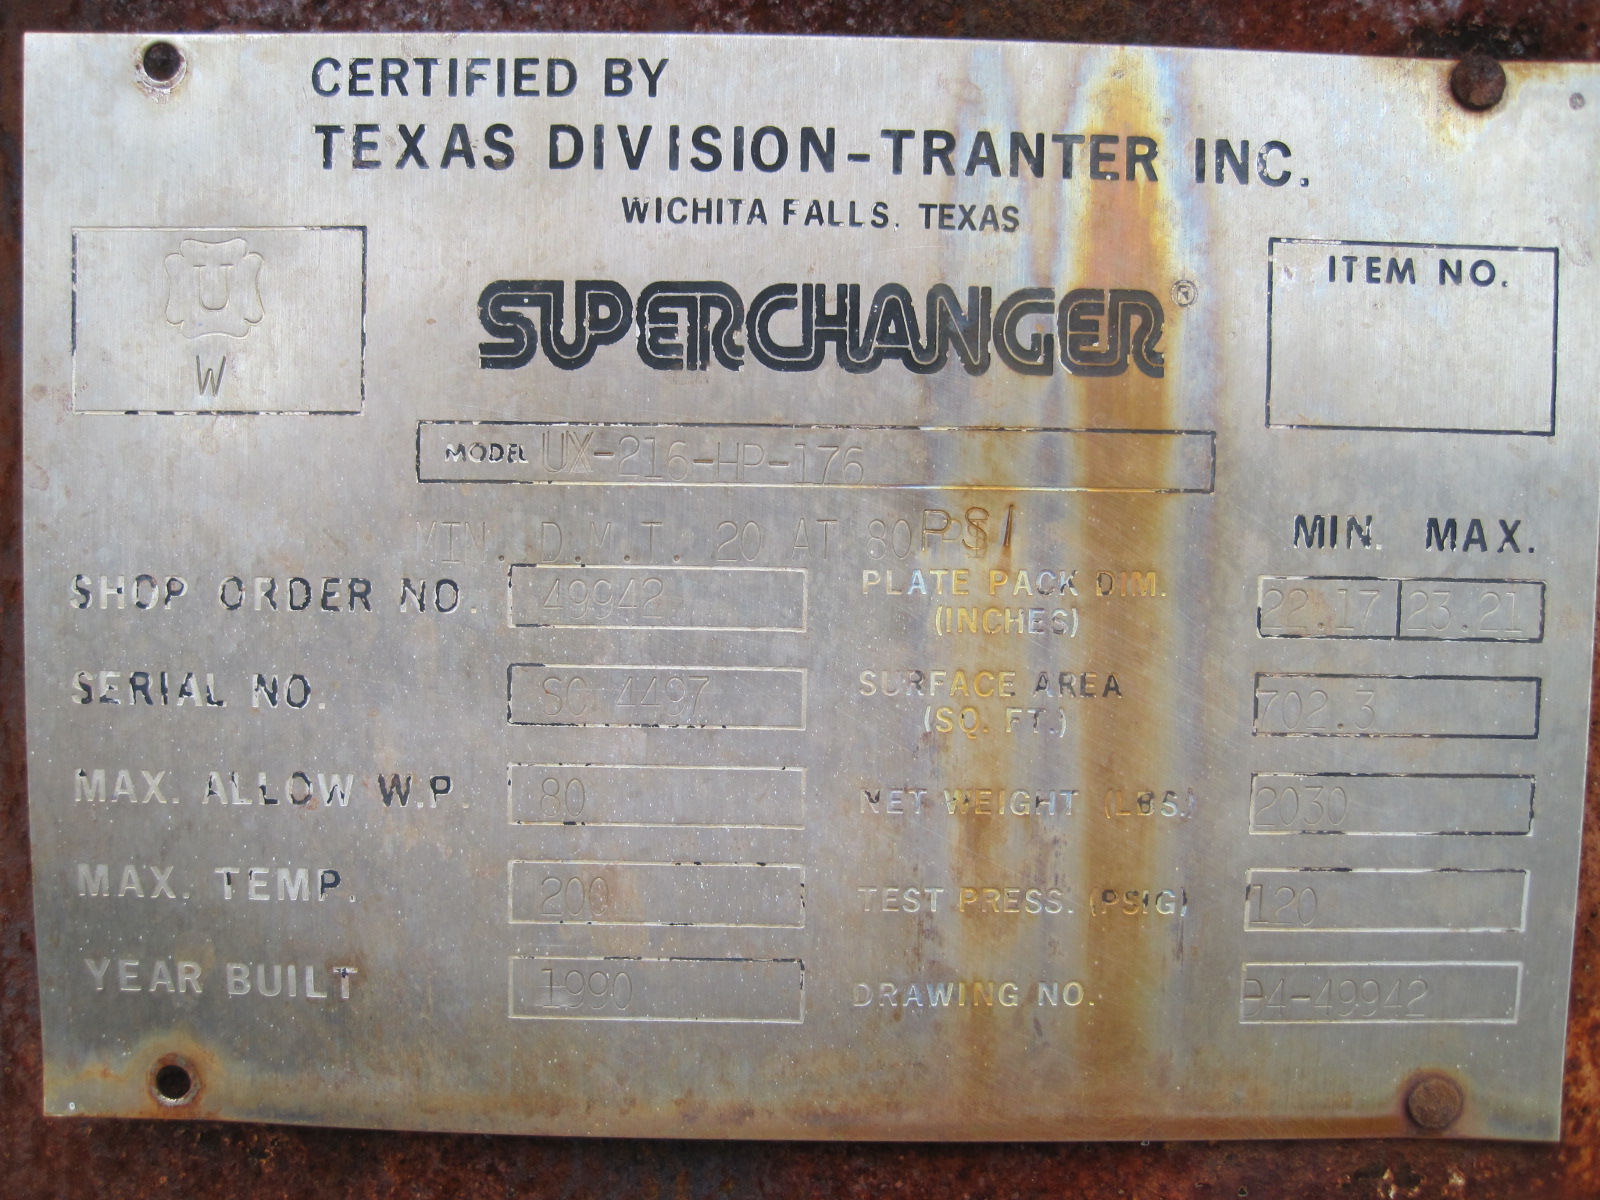 700 Sq. Ft. Superchanger Titanium Plate Heat Exchanger